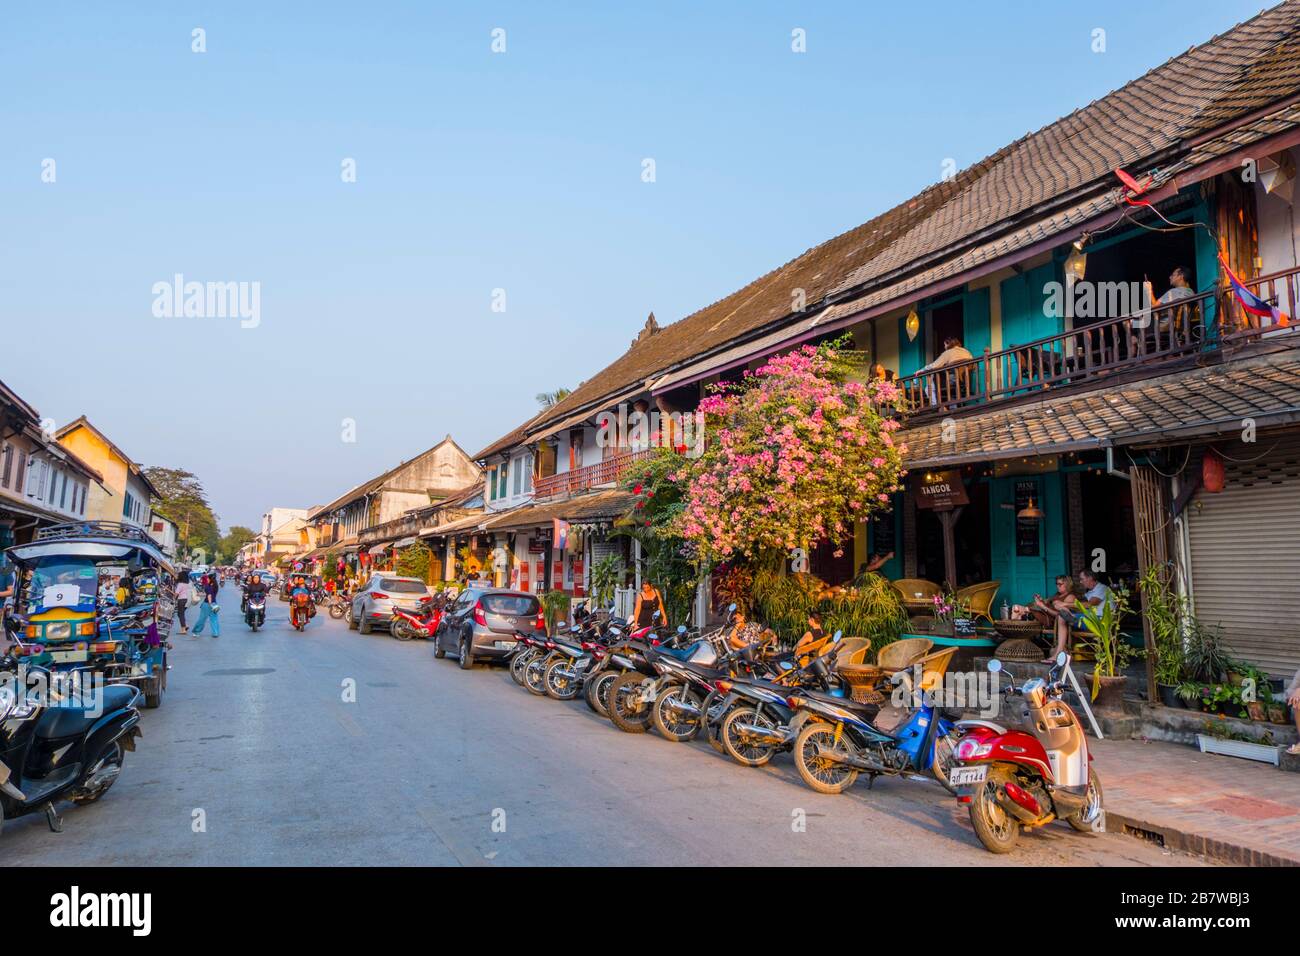 Sakkaline Road, vieille ville, Luang Prabang, Laos Banque D'Images